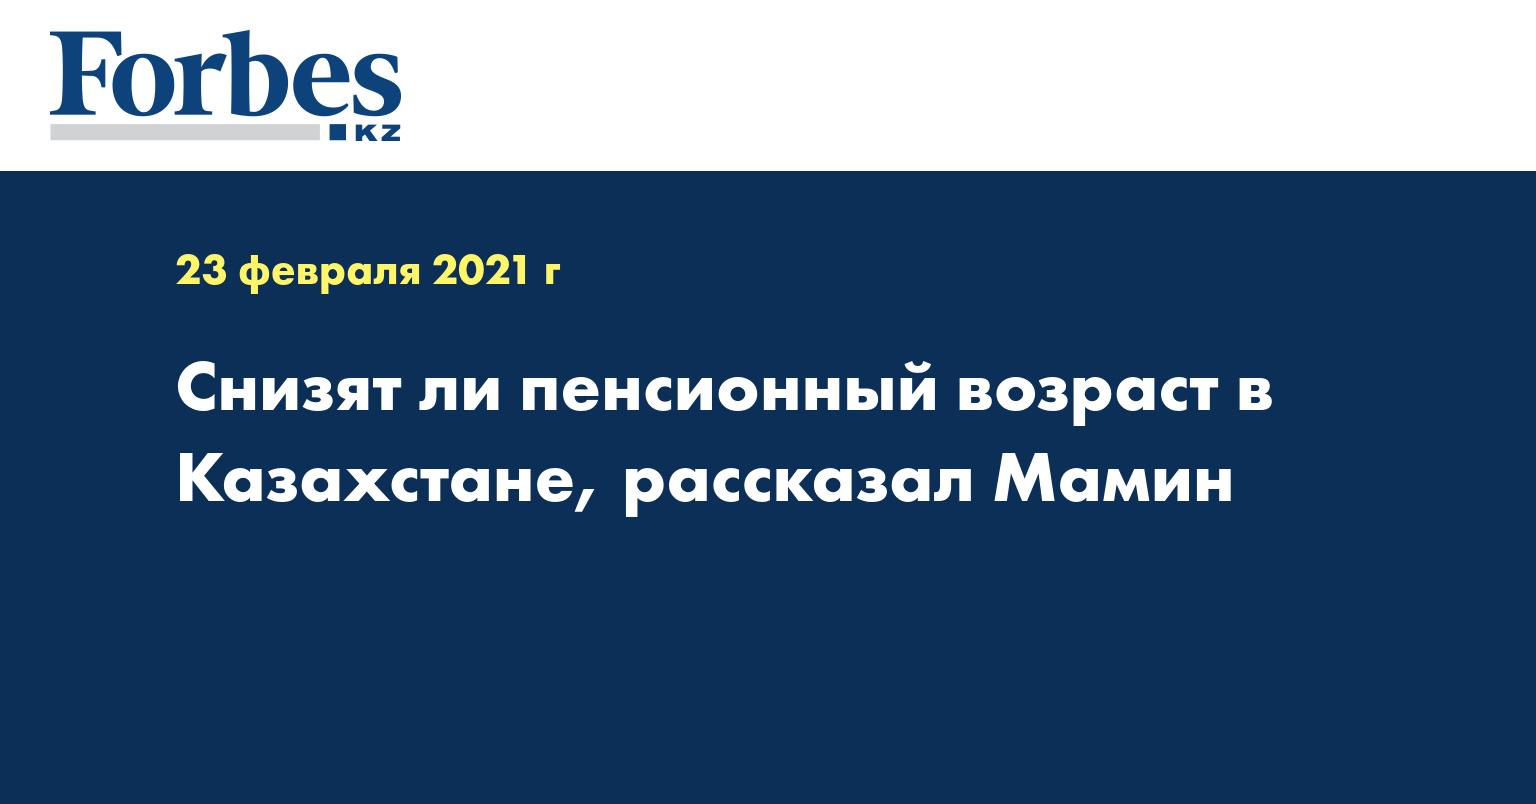 Снизят ли пенсионный возраст в Казахстане, рассказал Мамин